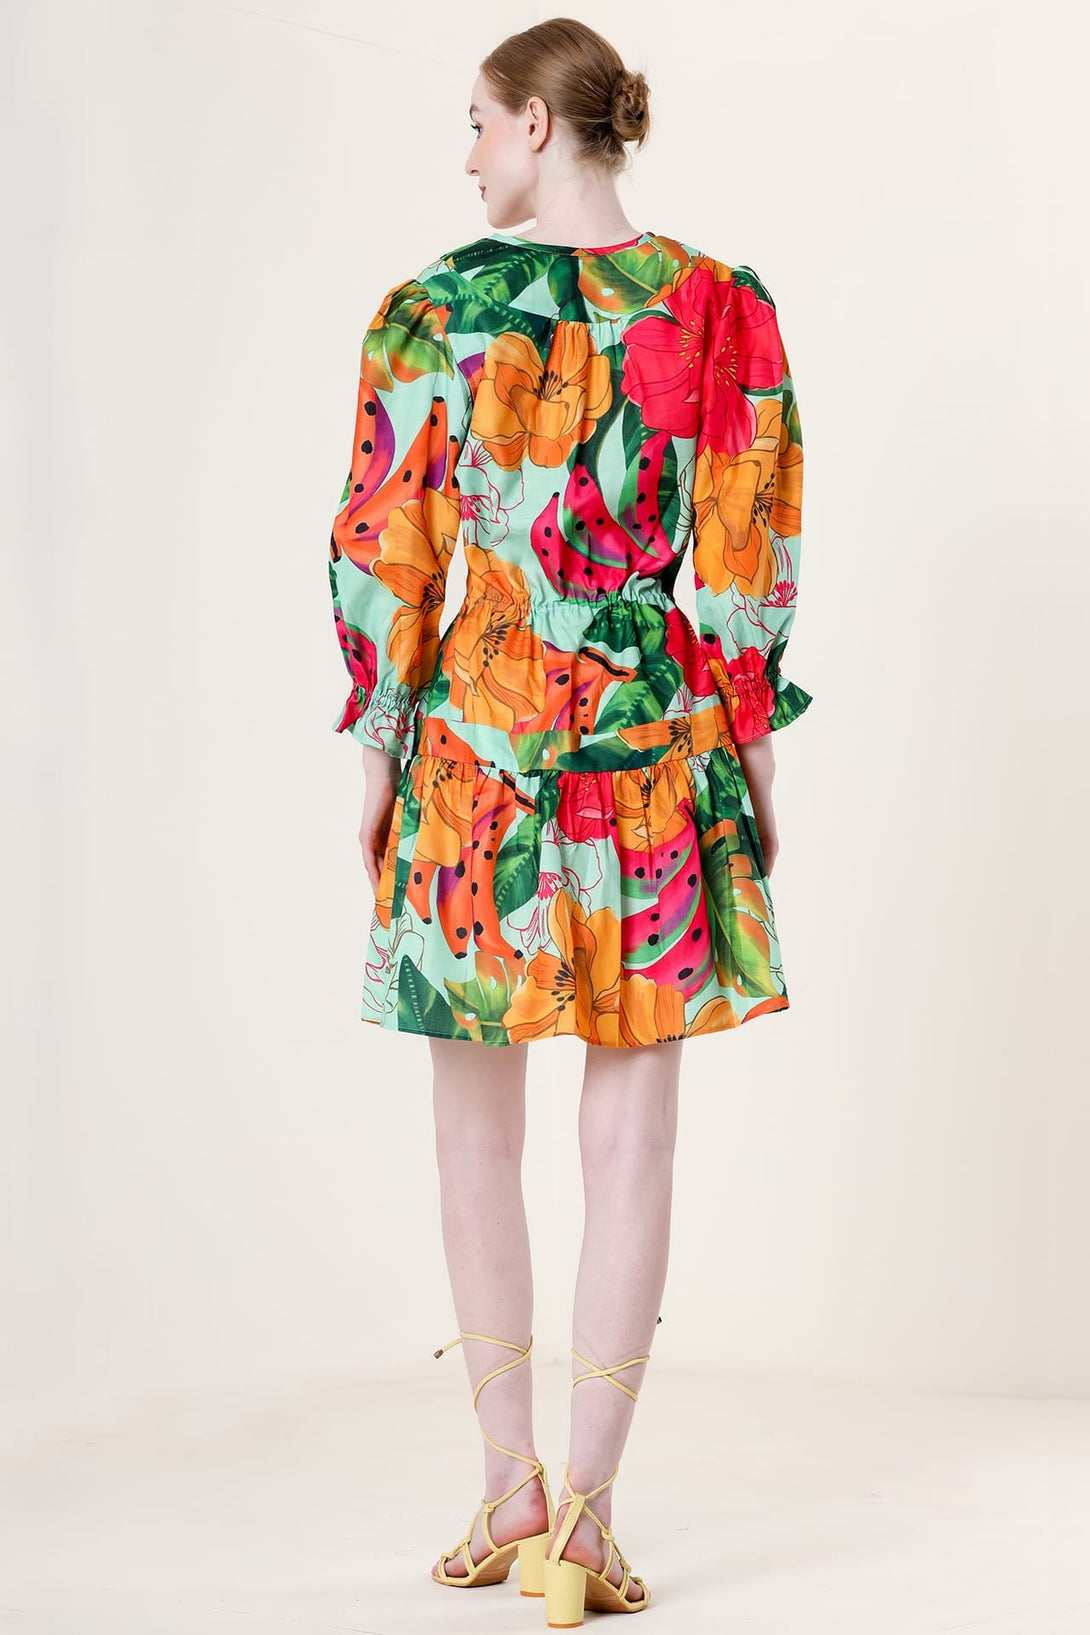 "colourful summer dresses" "knee length cocktail dress" "dress long sleeve midi"